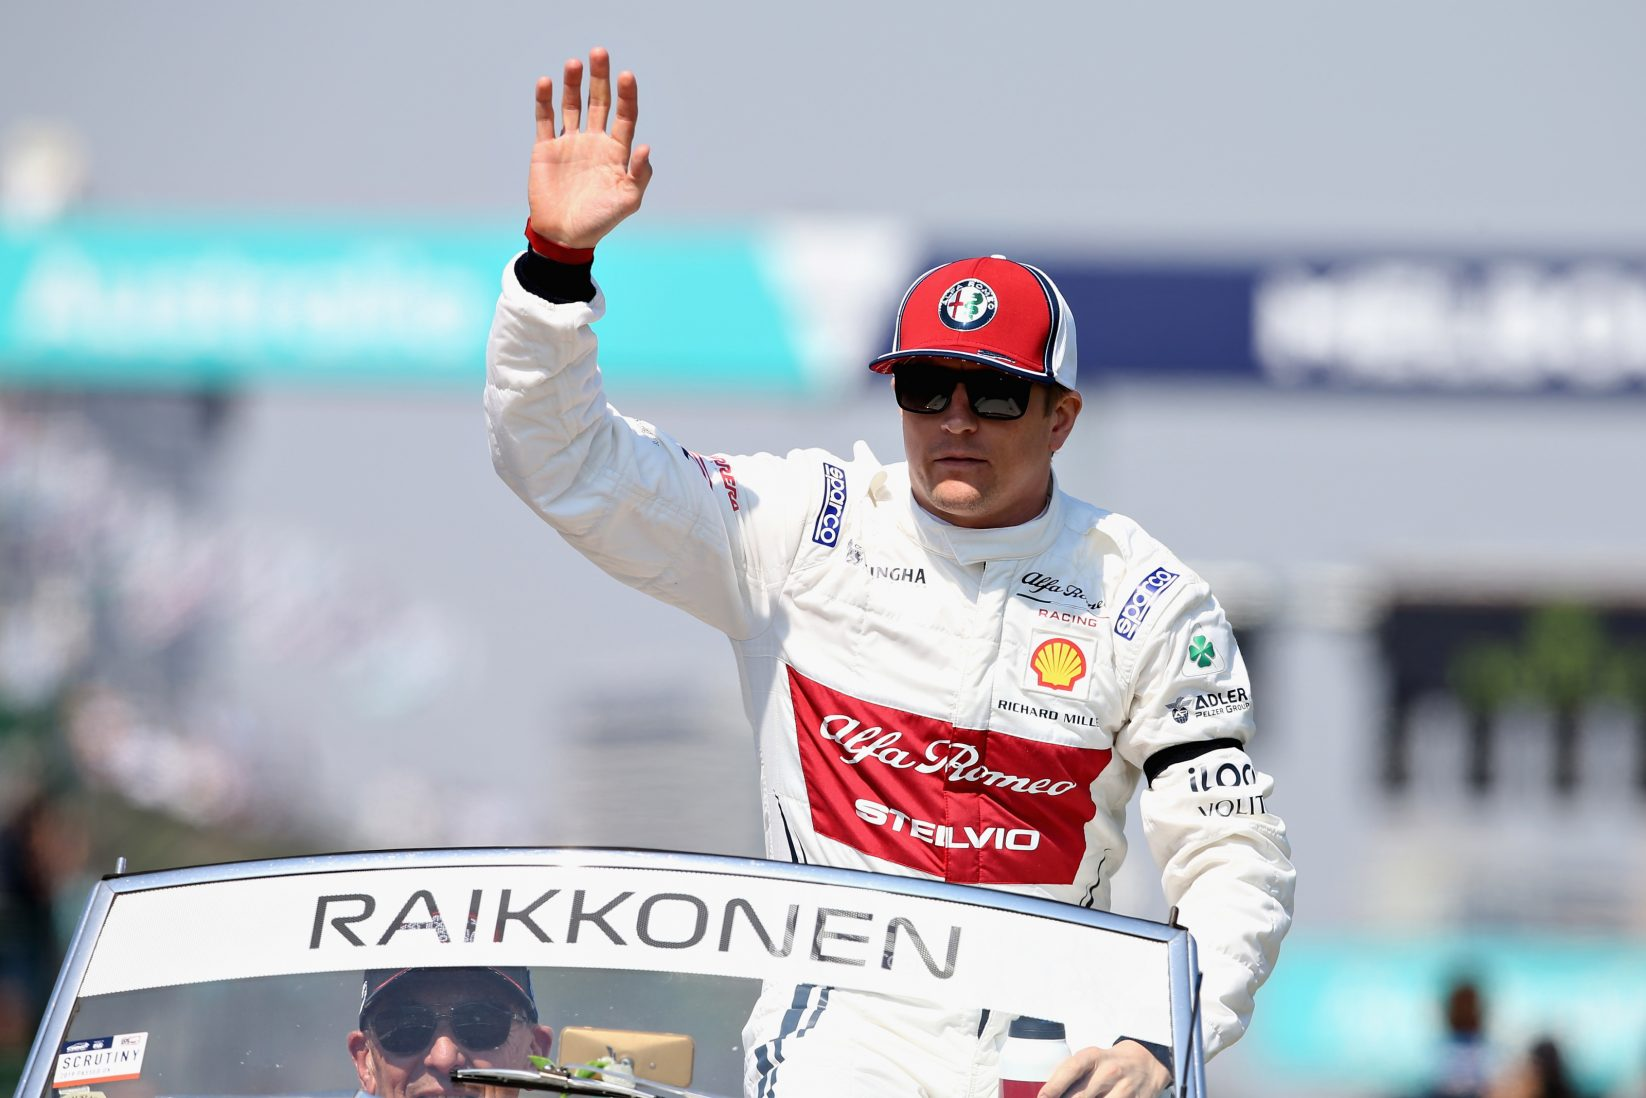 F1: Kimi Raikonnen to return during Russian Grand Prix